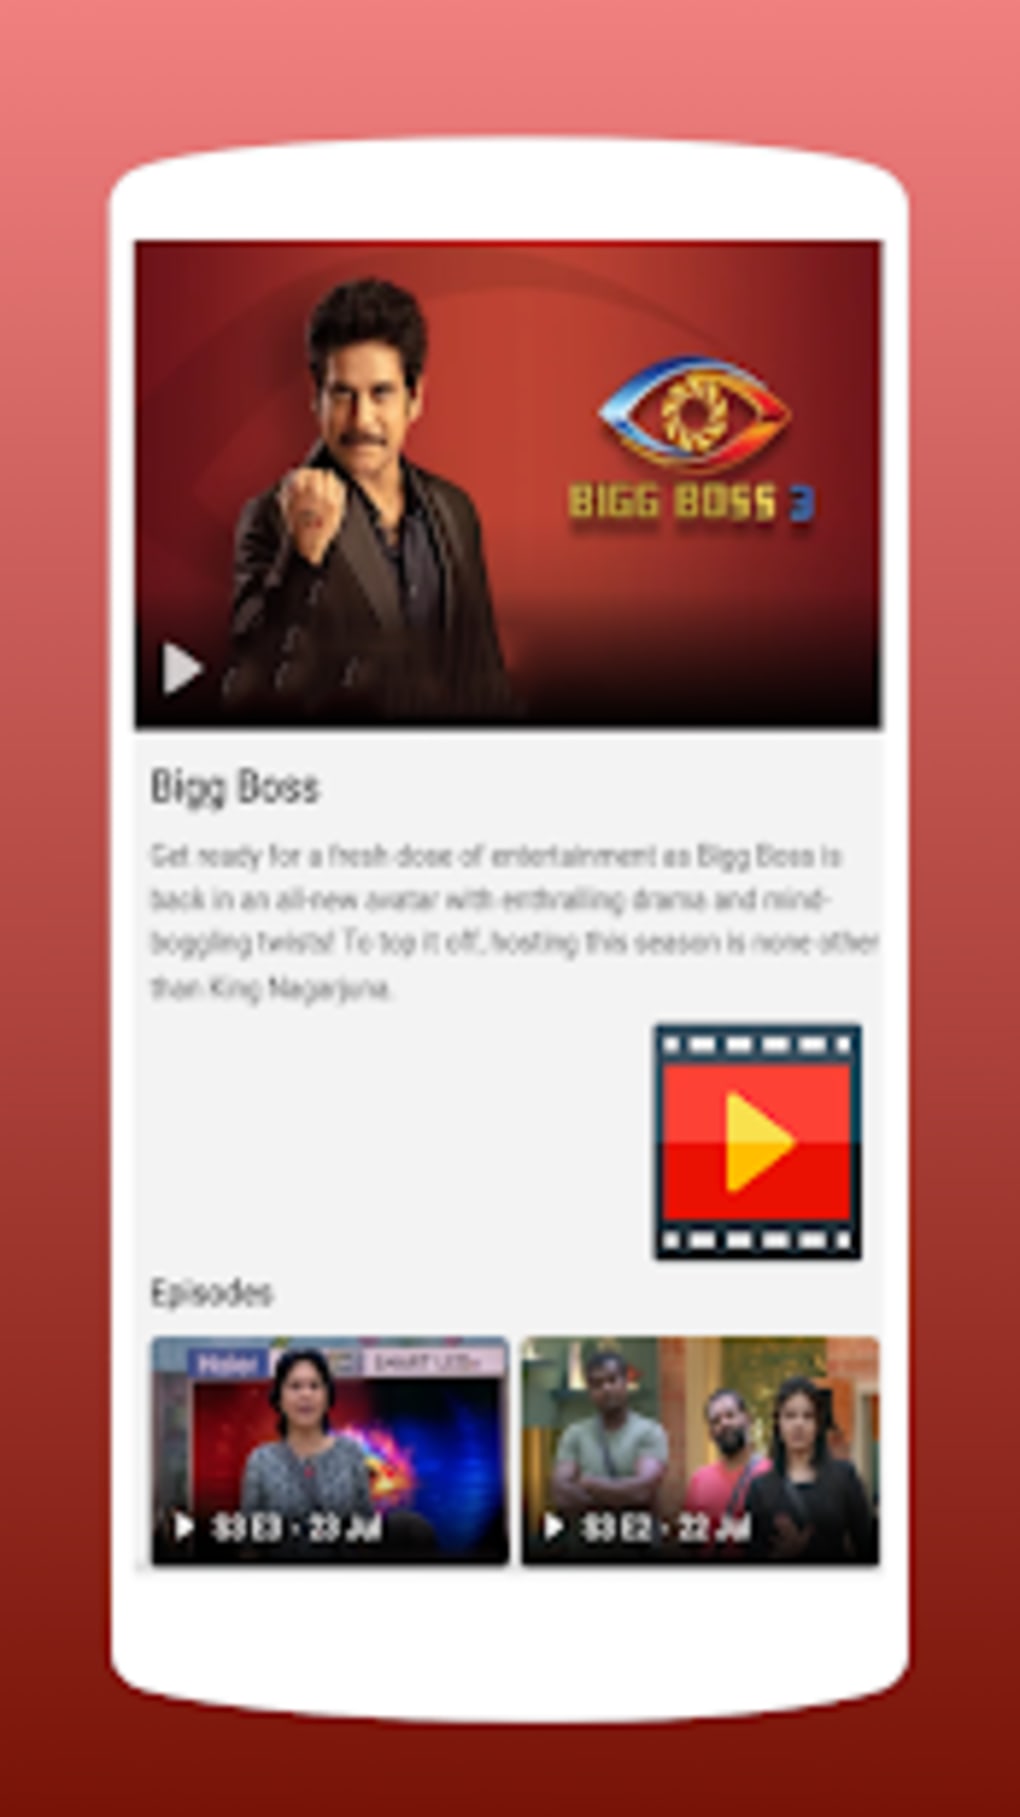 bigg boss 3 telugu episode watch online